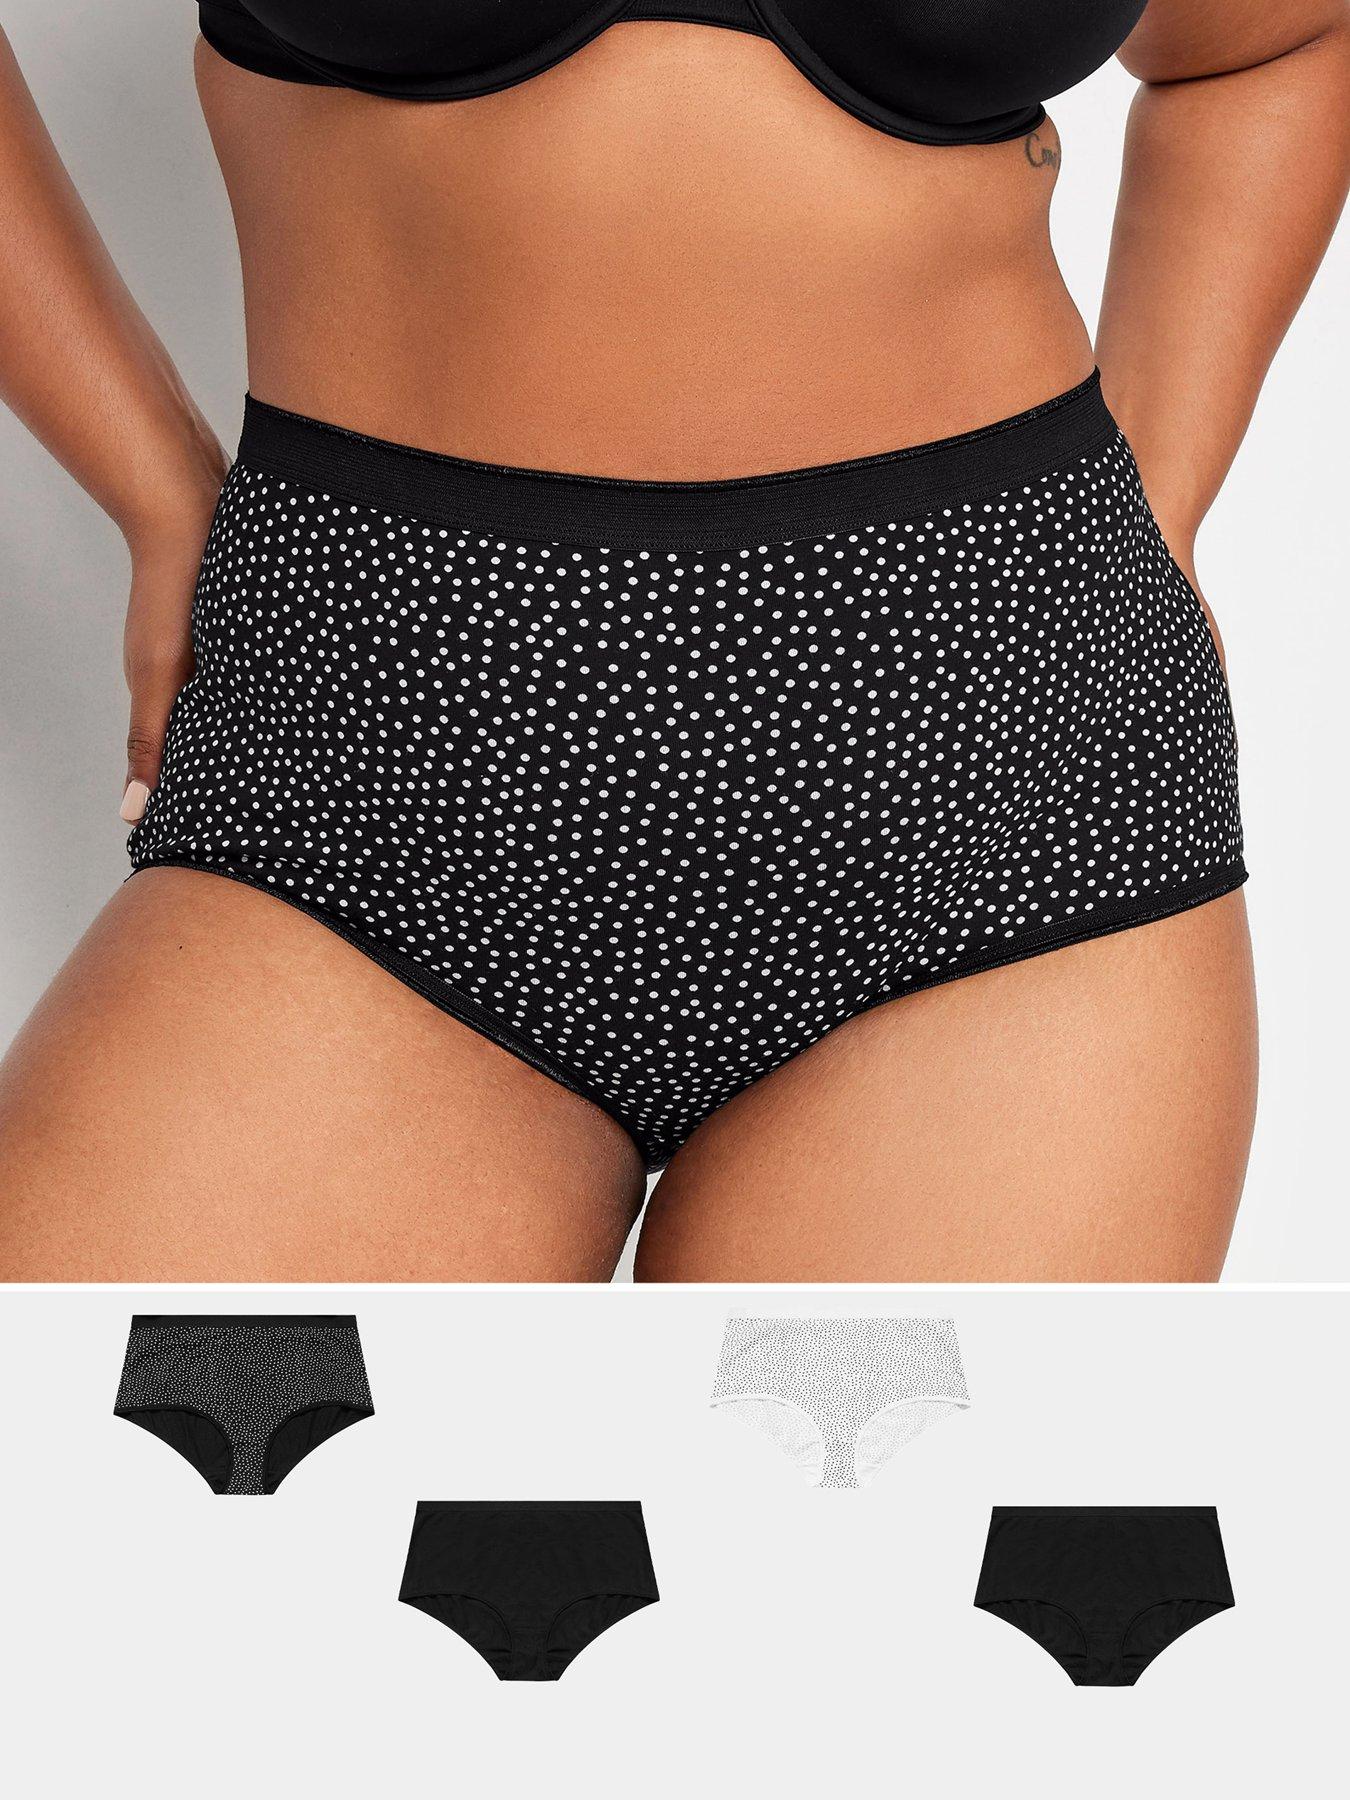 Buy Women's Underwear Online, Ladies Lingerie